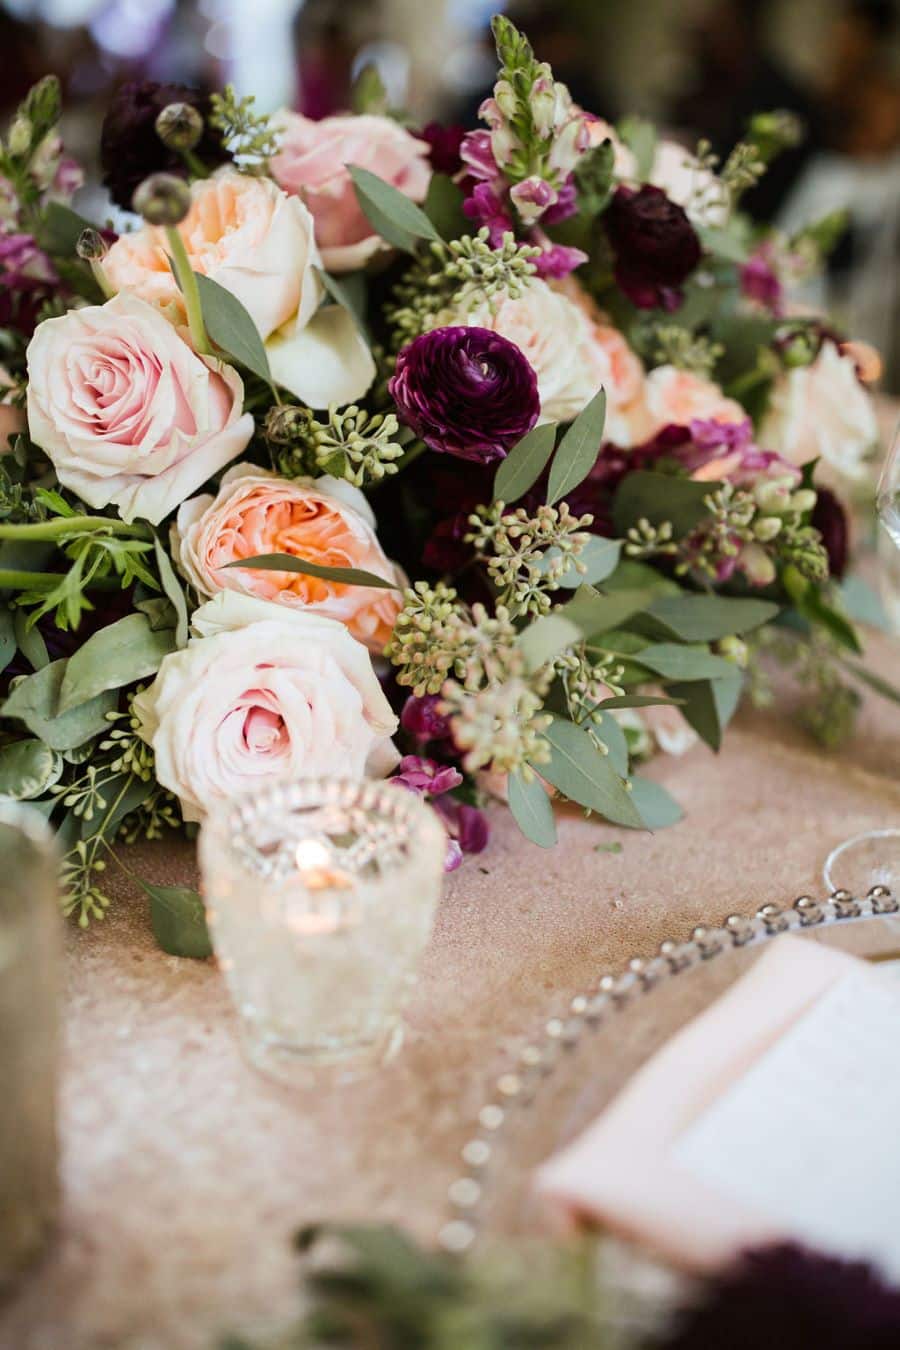 Wine, peach, blush colored floral arrangement on sweetheart table / romantic lgbtq / fall / September / blush / burgundy